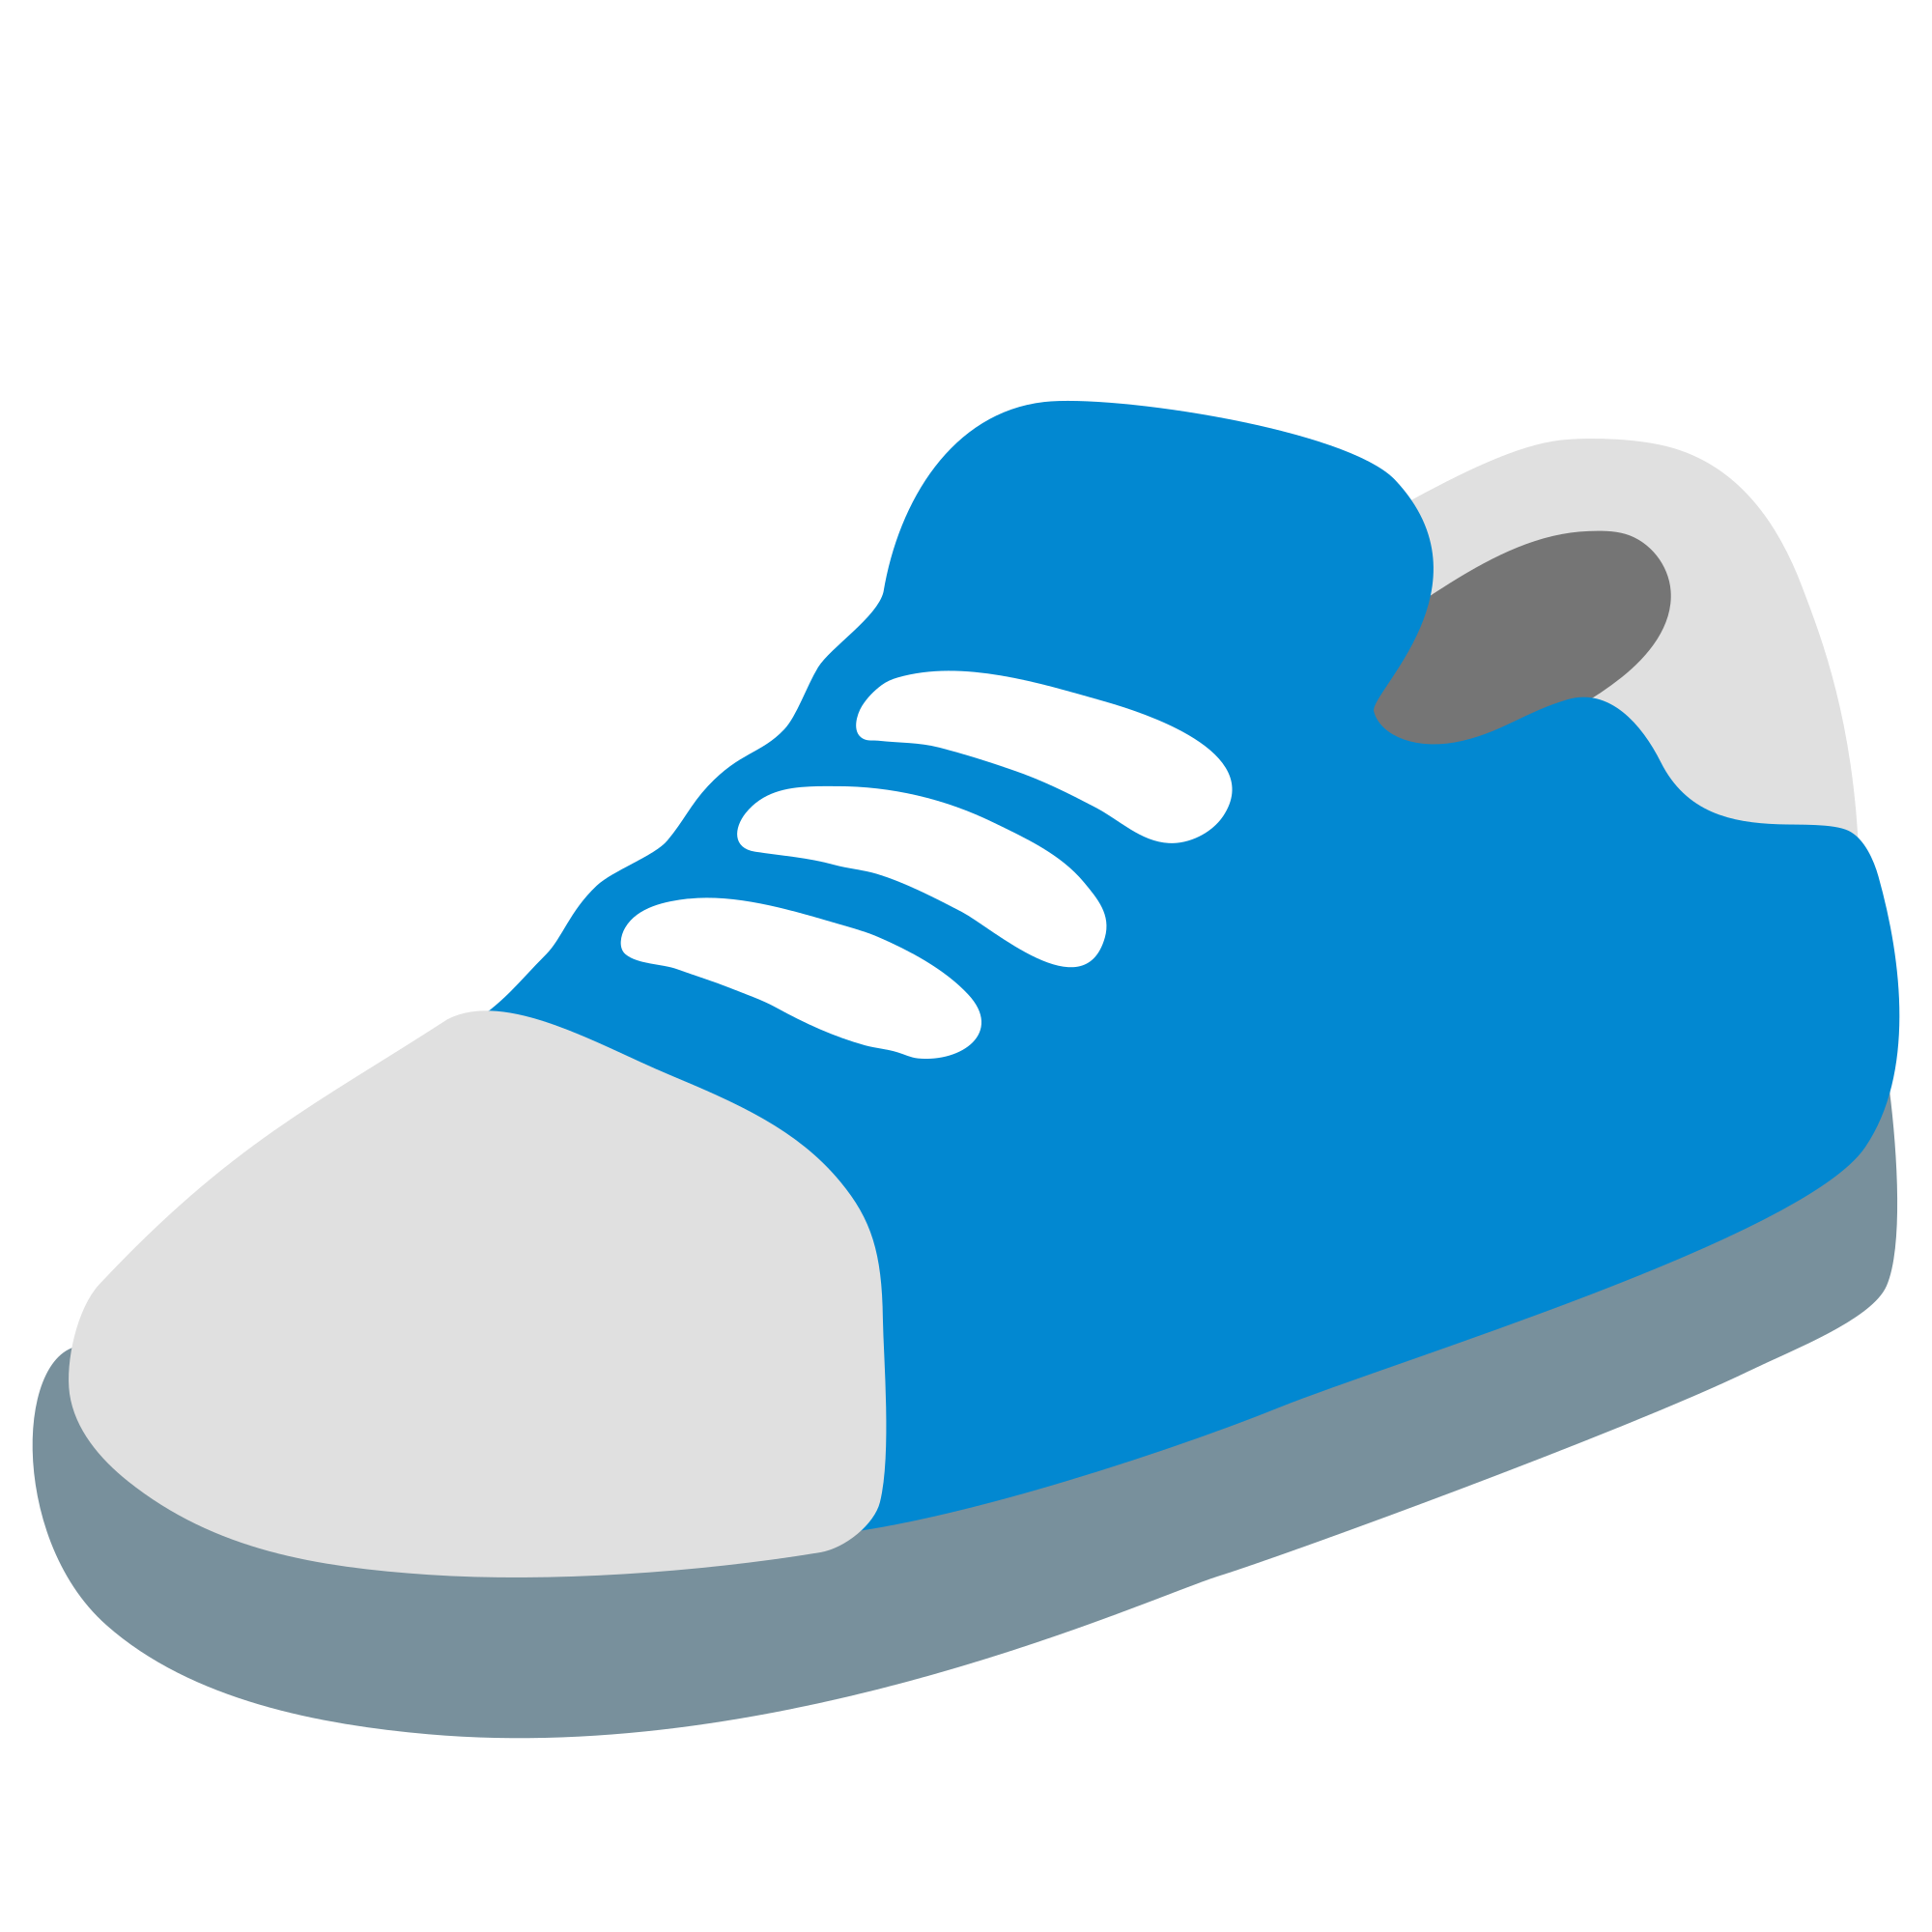 emoji clipart shoe